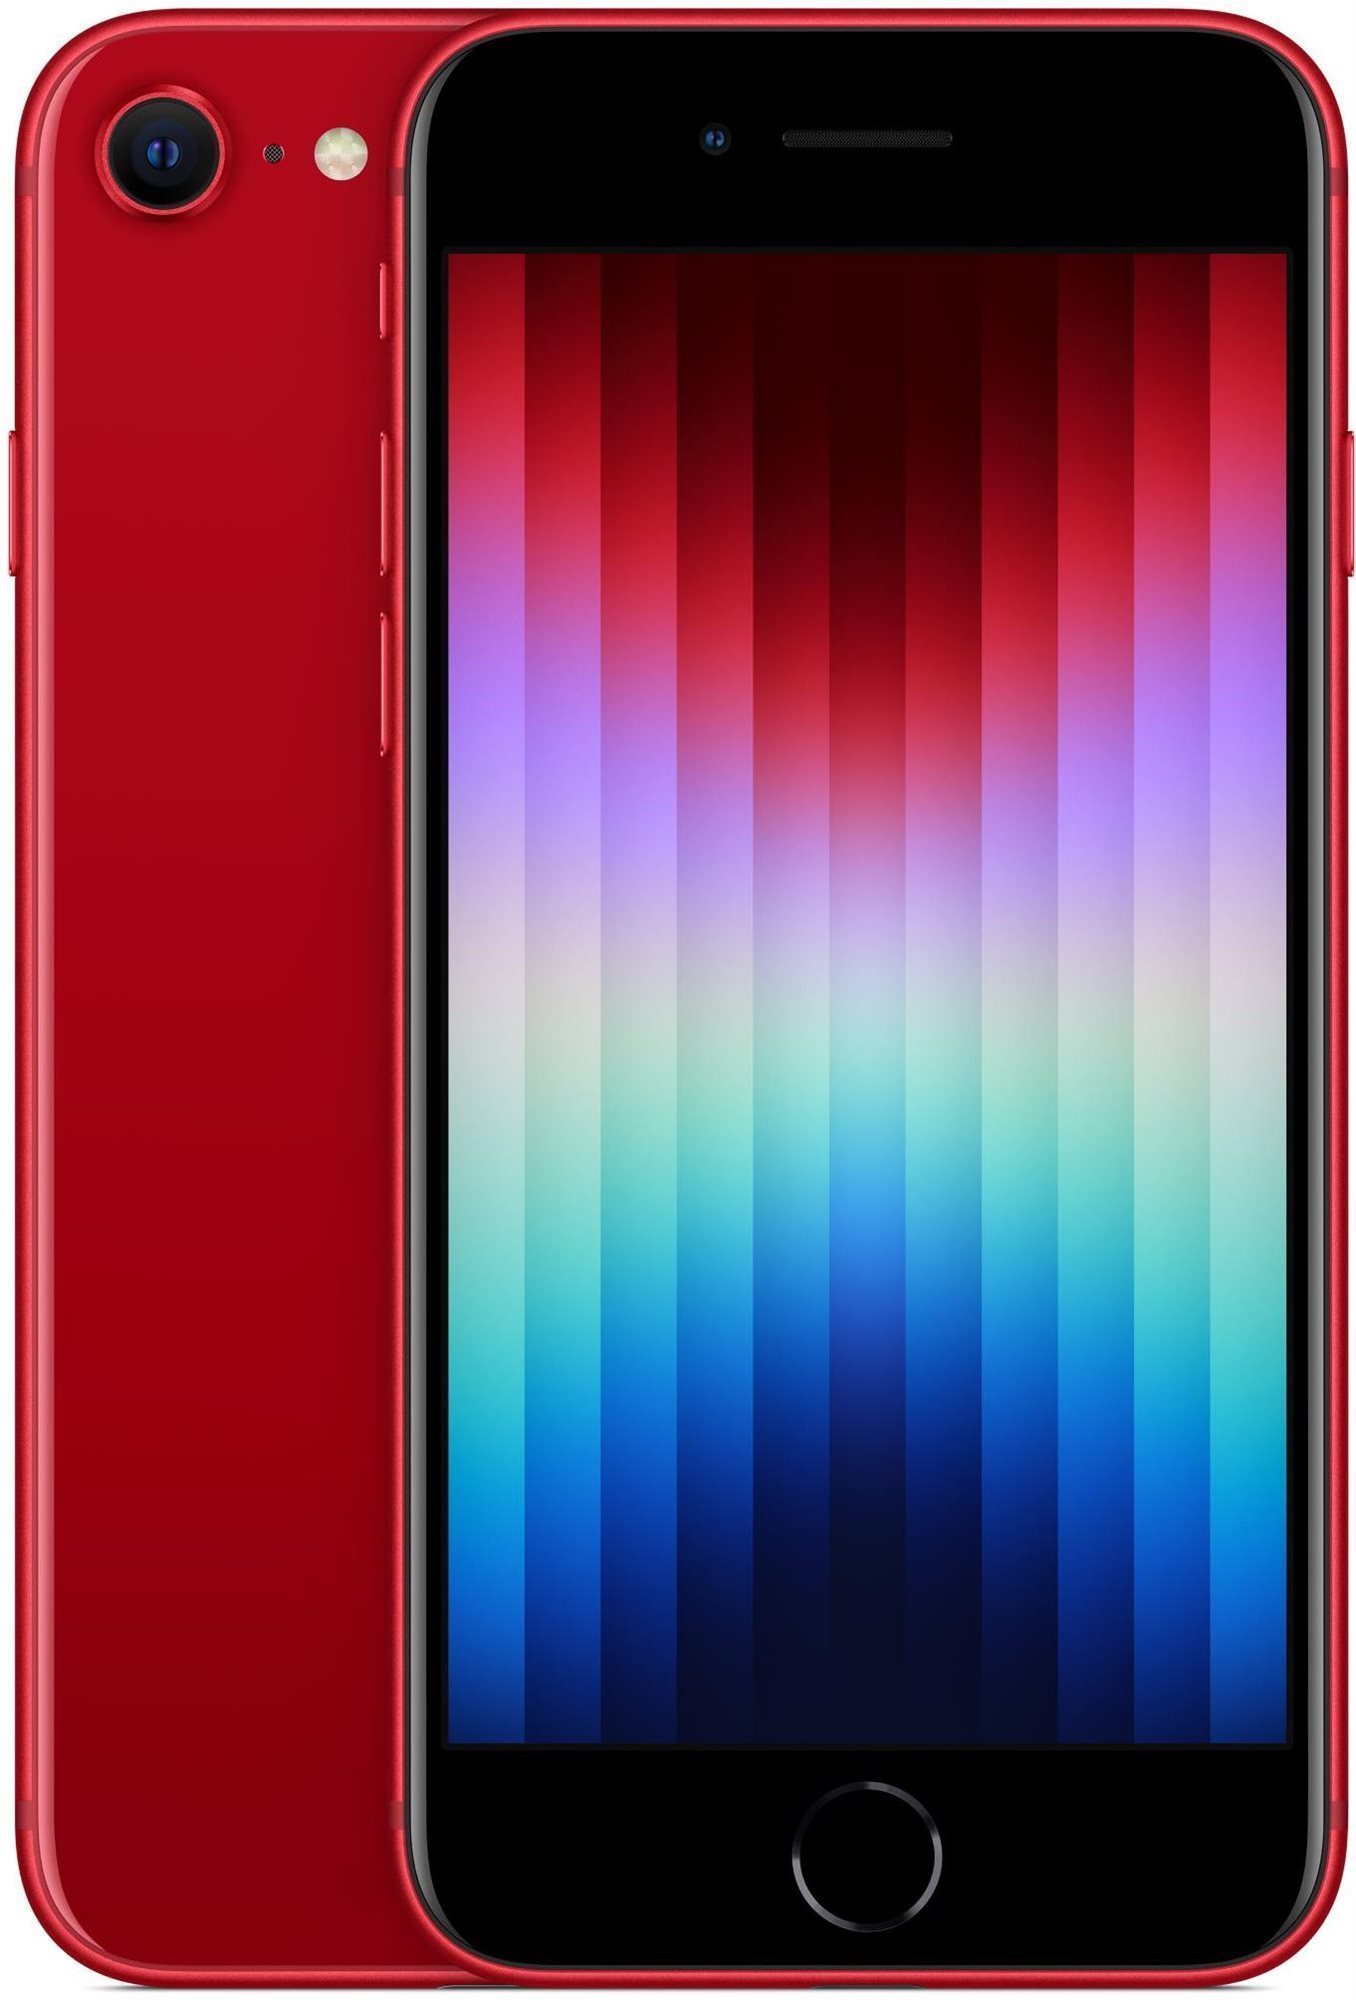 Mobiltelefon iPhone SE 64 GB (PRODUCT)RED 2022